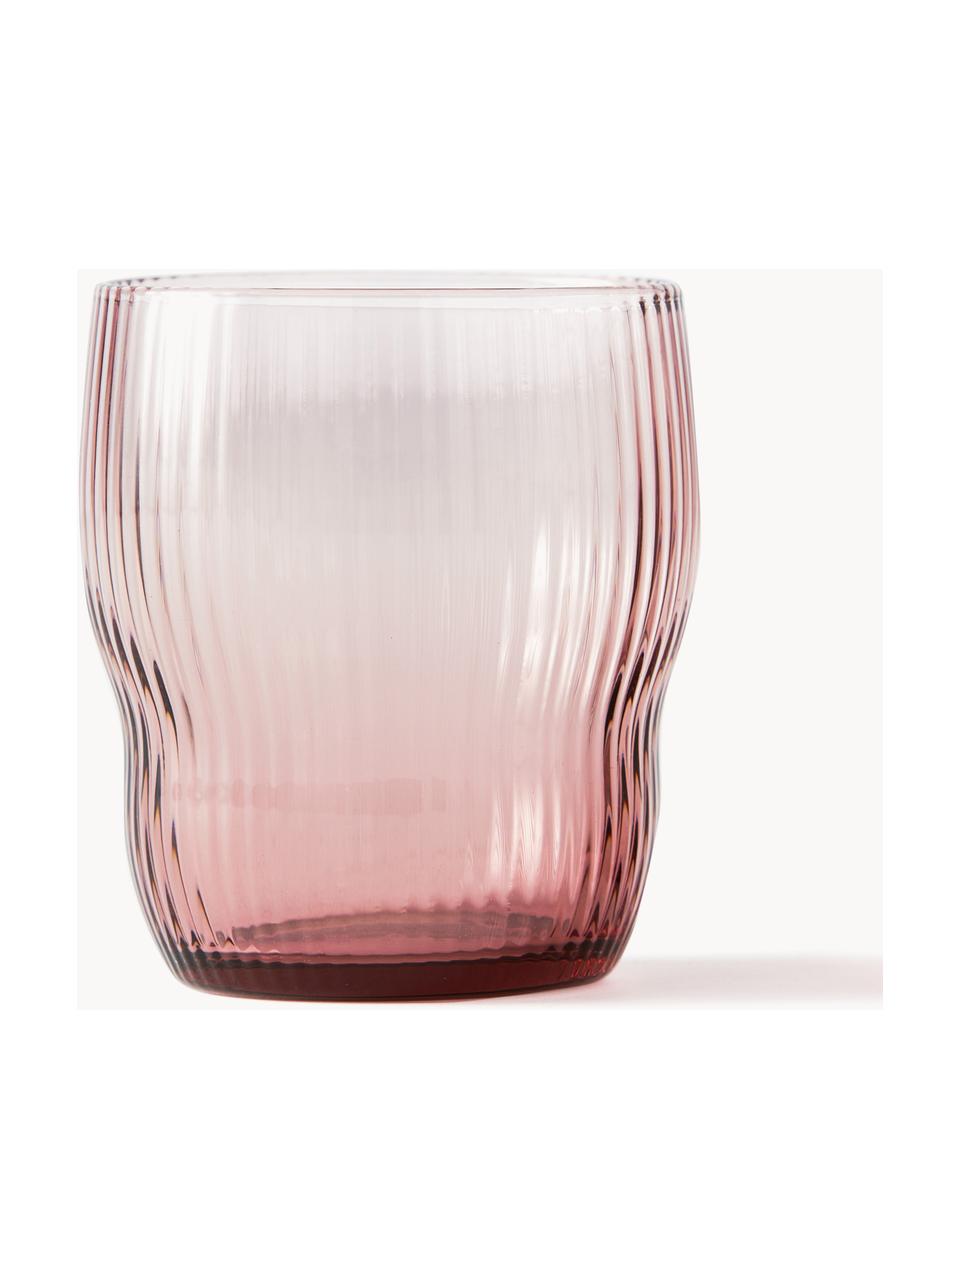 Ručně foukané sklenice s rýhovanou strukturou Pum, 2 ks, Foukané sklo, Starorůžová, Ø 8 cm, V 9 cm, 200 ml